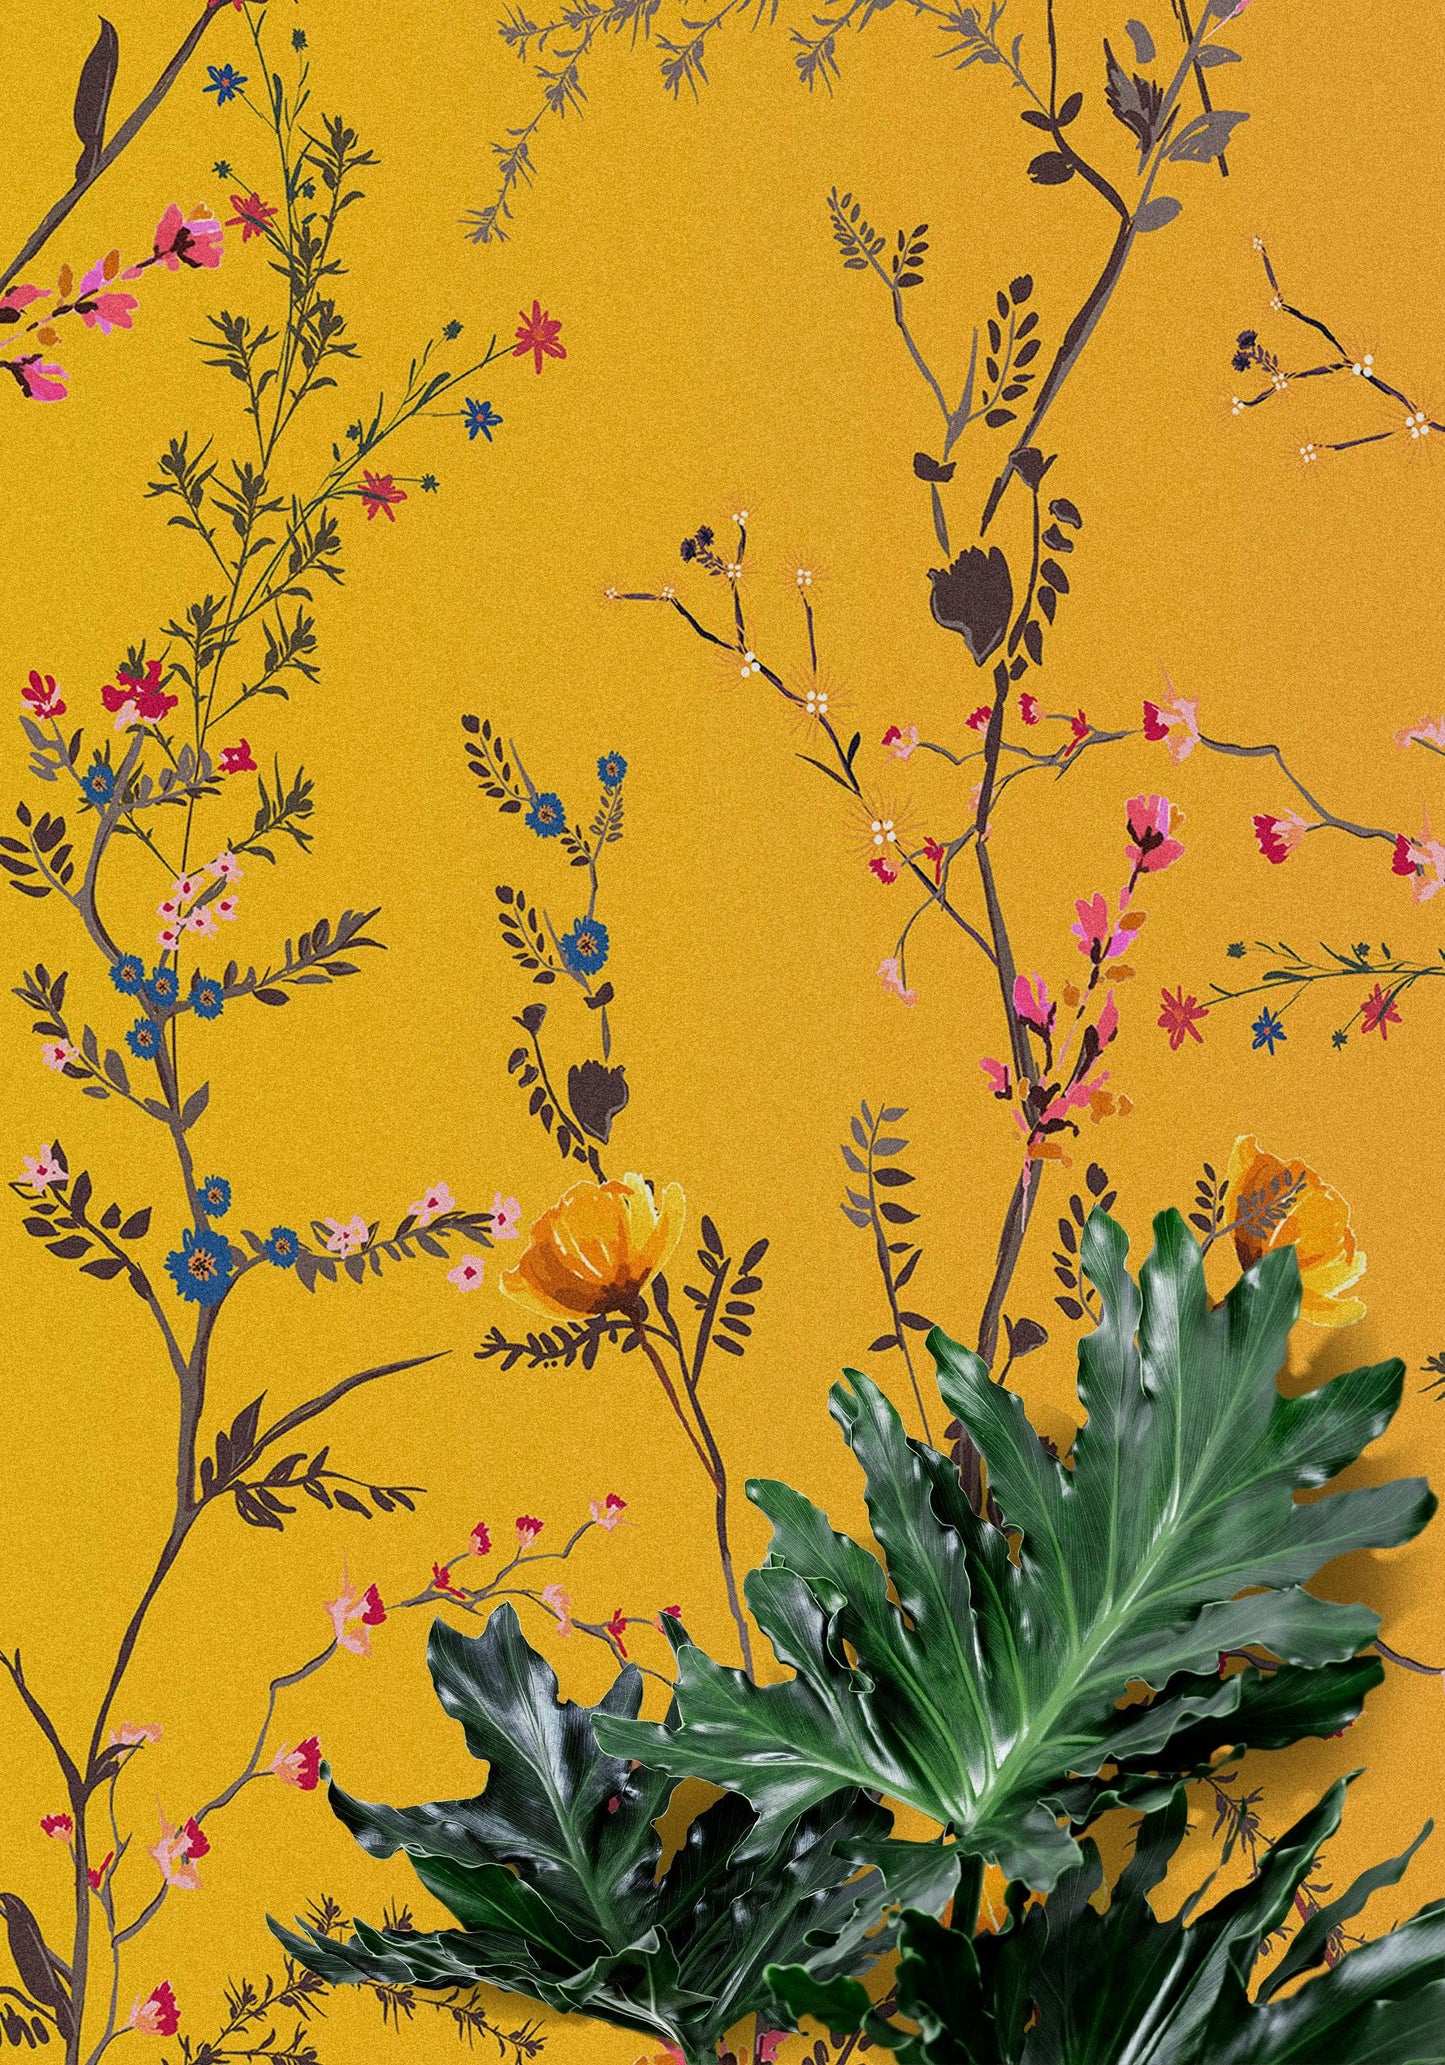 Botanical Flower Garden With Yellow Orange Background Wall Mural. Blossom Flower Decor. #6355